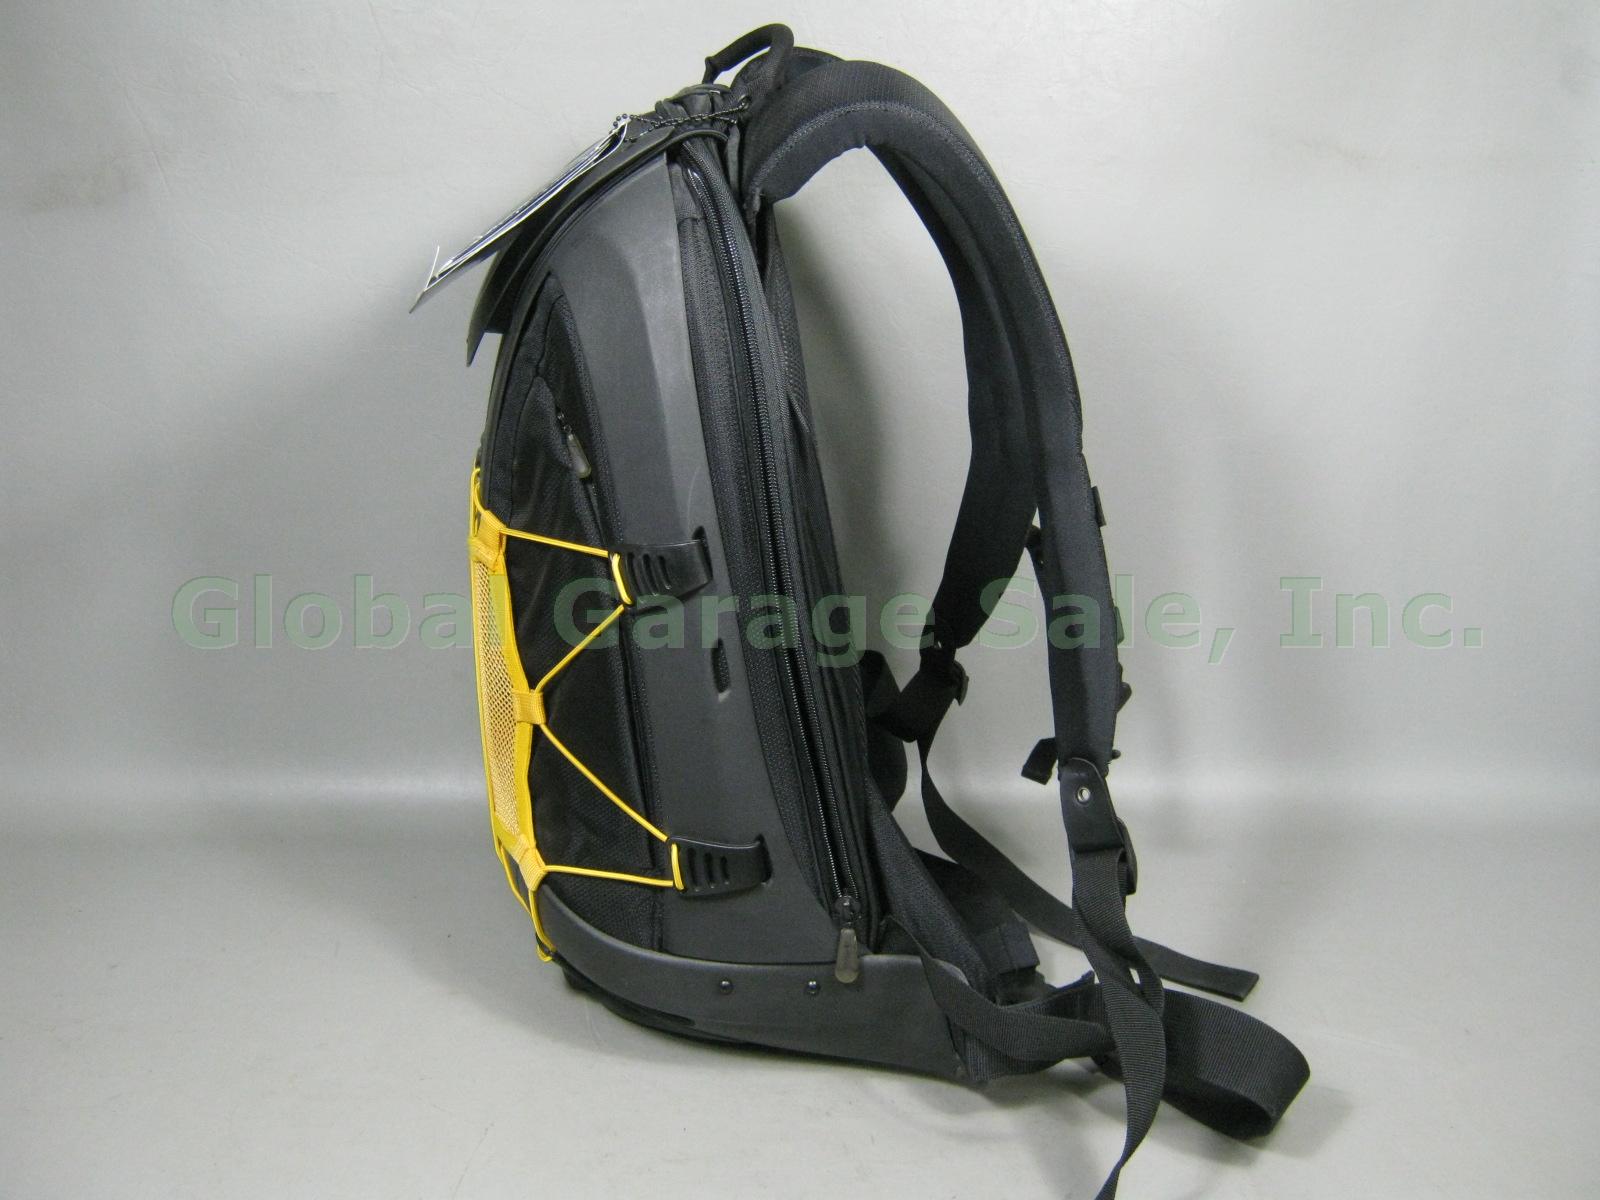 NOS New Old Stock Nike Epic E1 BioKNX Backpack With Tags Exoskeleton Hardshell 2